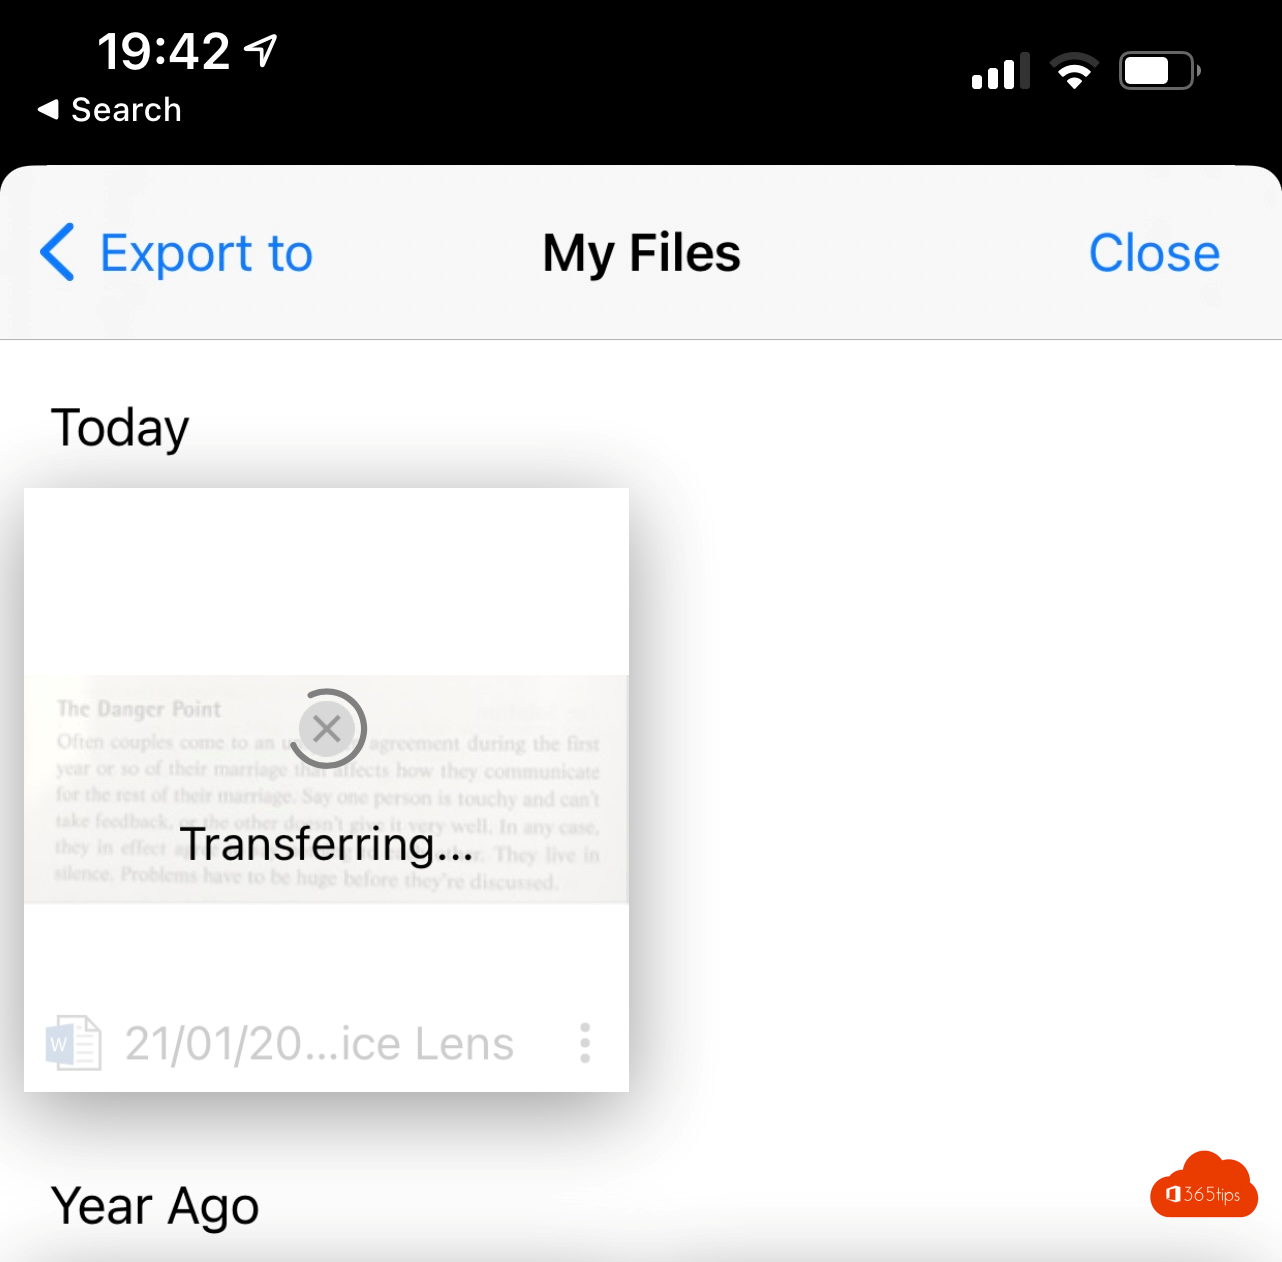 Cómo convertir un documento en un documento editable en Office Lens (OCR)